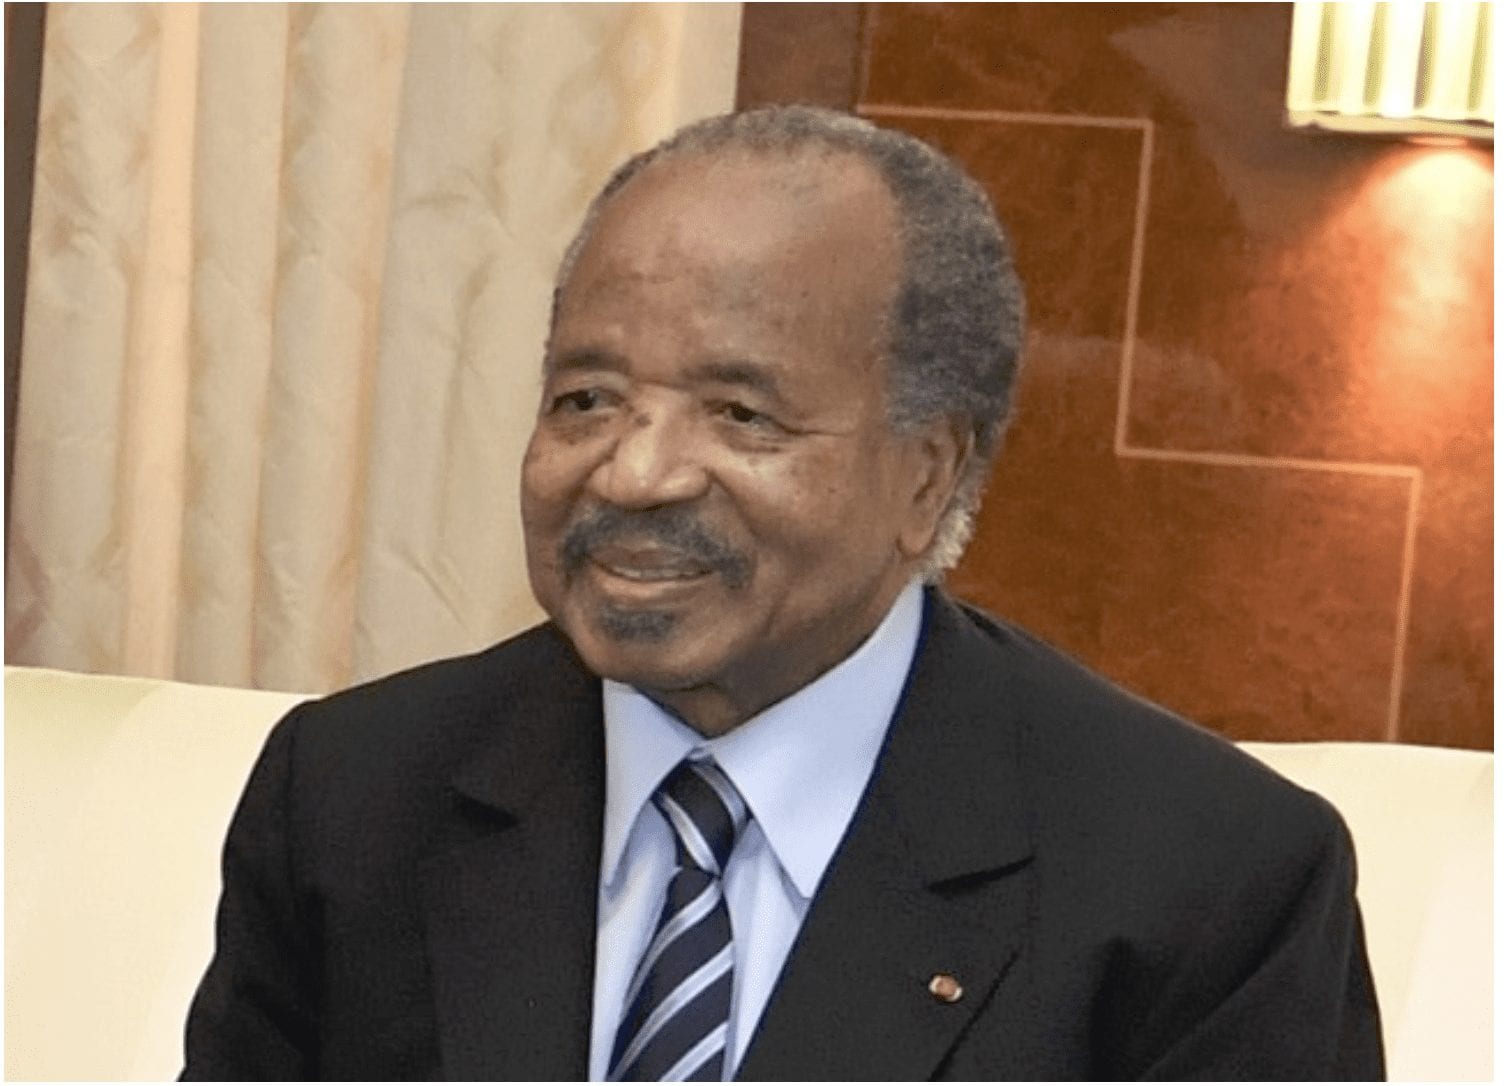 Nouveau Look Capillaire De Paul Biya, Le President Camerounais